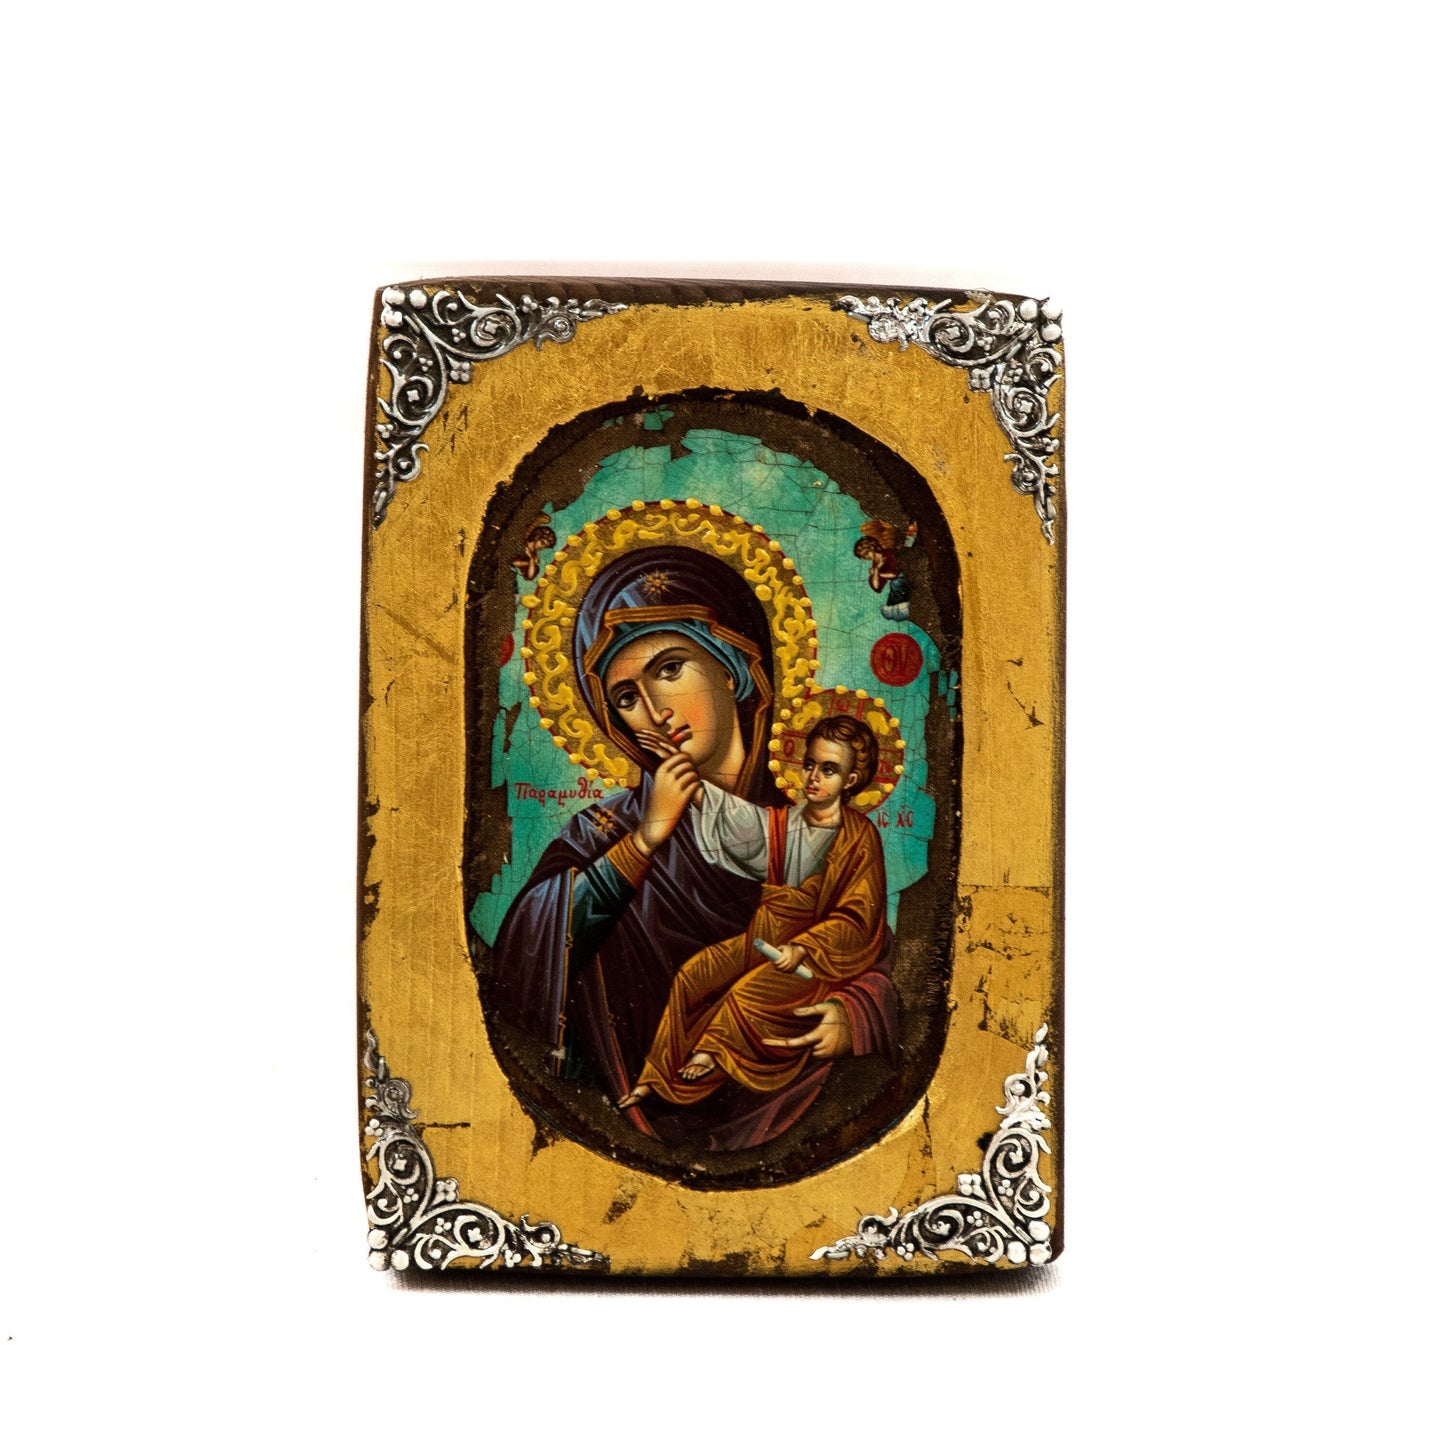 Virgin Mary icon, Handmade Greek Orthodox icon of Theotokos, Mother of God Byzantine art wall hanging wood canvas icon gold leaf 18x14cm TheHolyArt